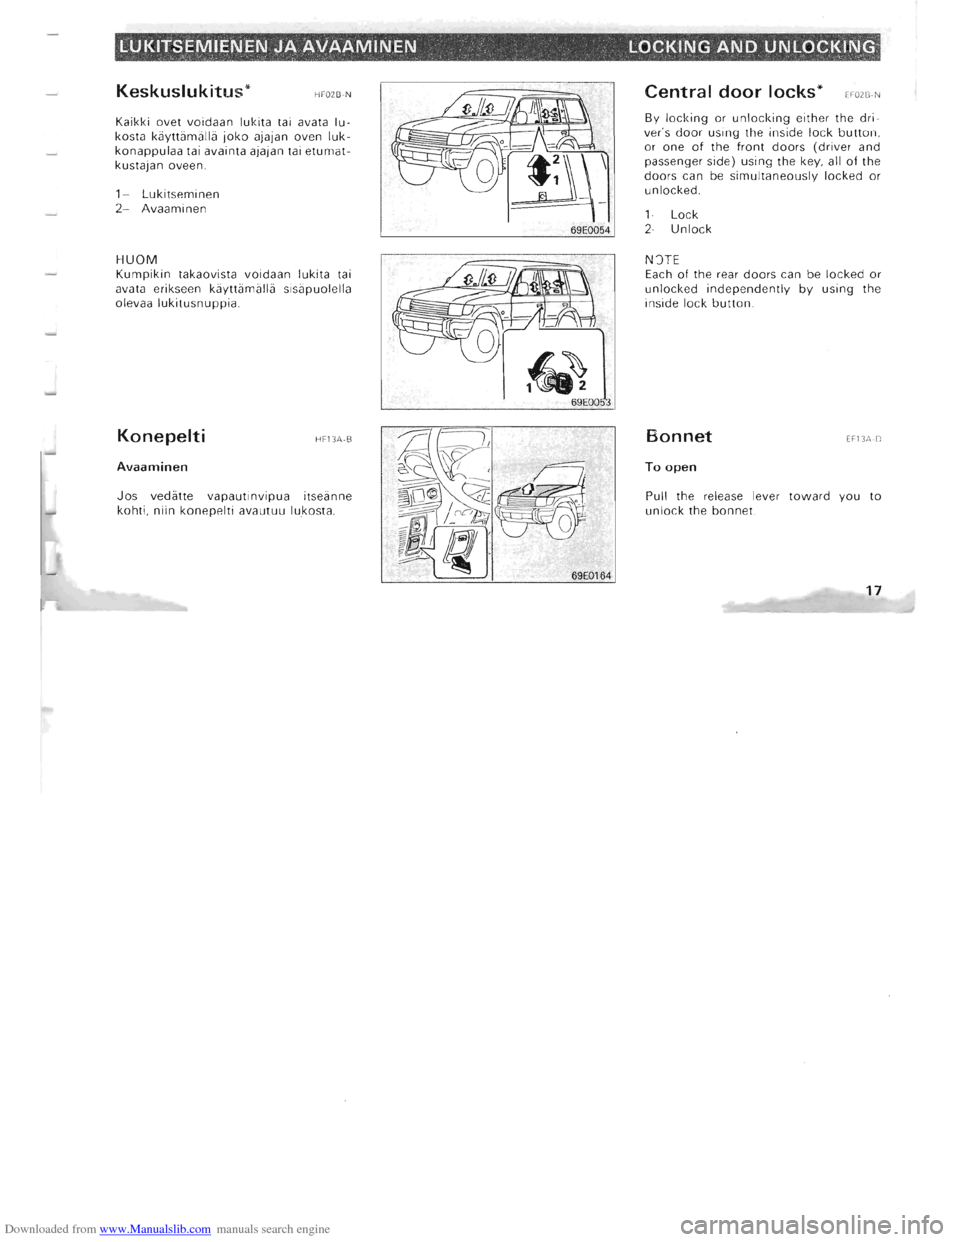 MITSUBISHI PAJERO 1996 2.G User Guide Downloaded from www.Manualslib.com manuals search engine LUKITSEMIENEN JA AVAAMINEN LOCKING AND UNLOCKING: " ,t ", • I. ",,, 
Keskuslukitus* HF02B·N 
Kaikki  ovet voidaan  lukita tai avata lu